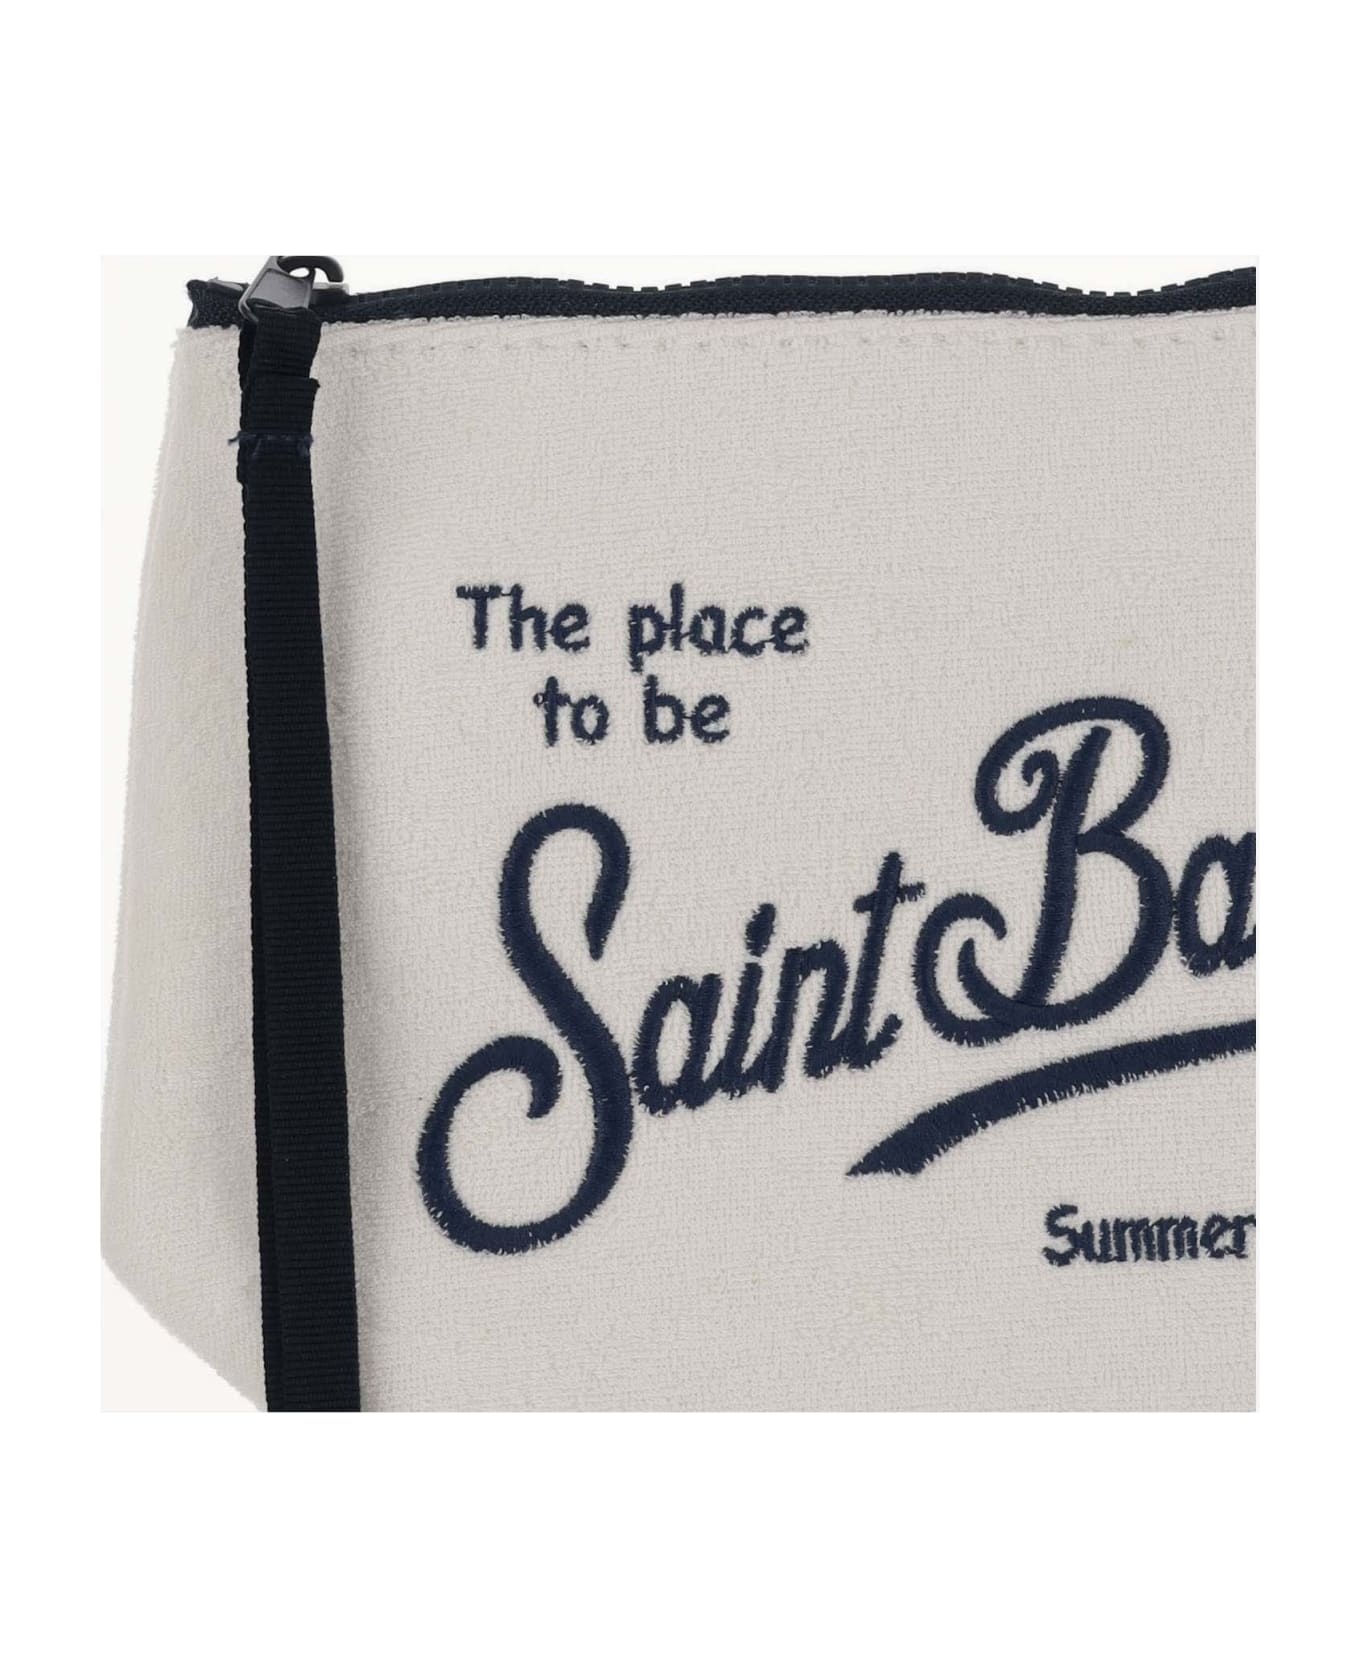 MC2 Saint Barth Fabric Clutch Bag With Logo - White クラッチバッグ